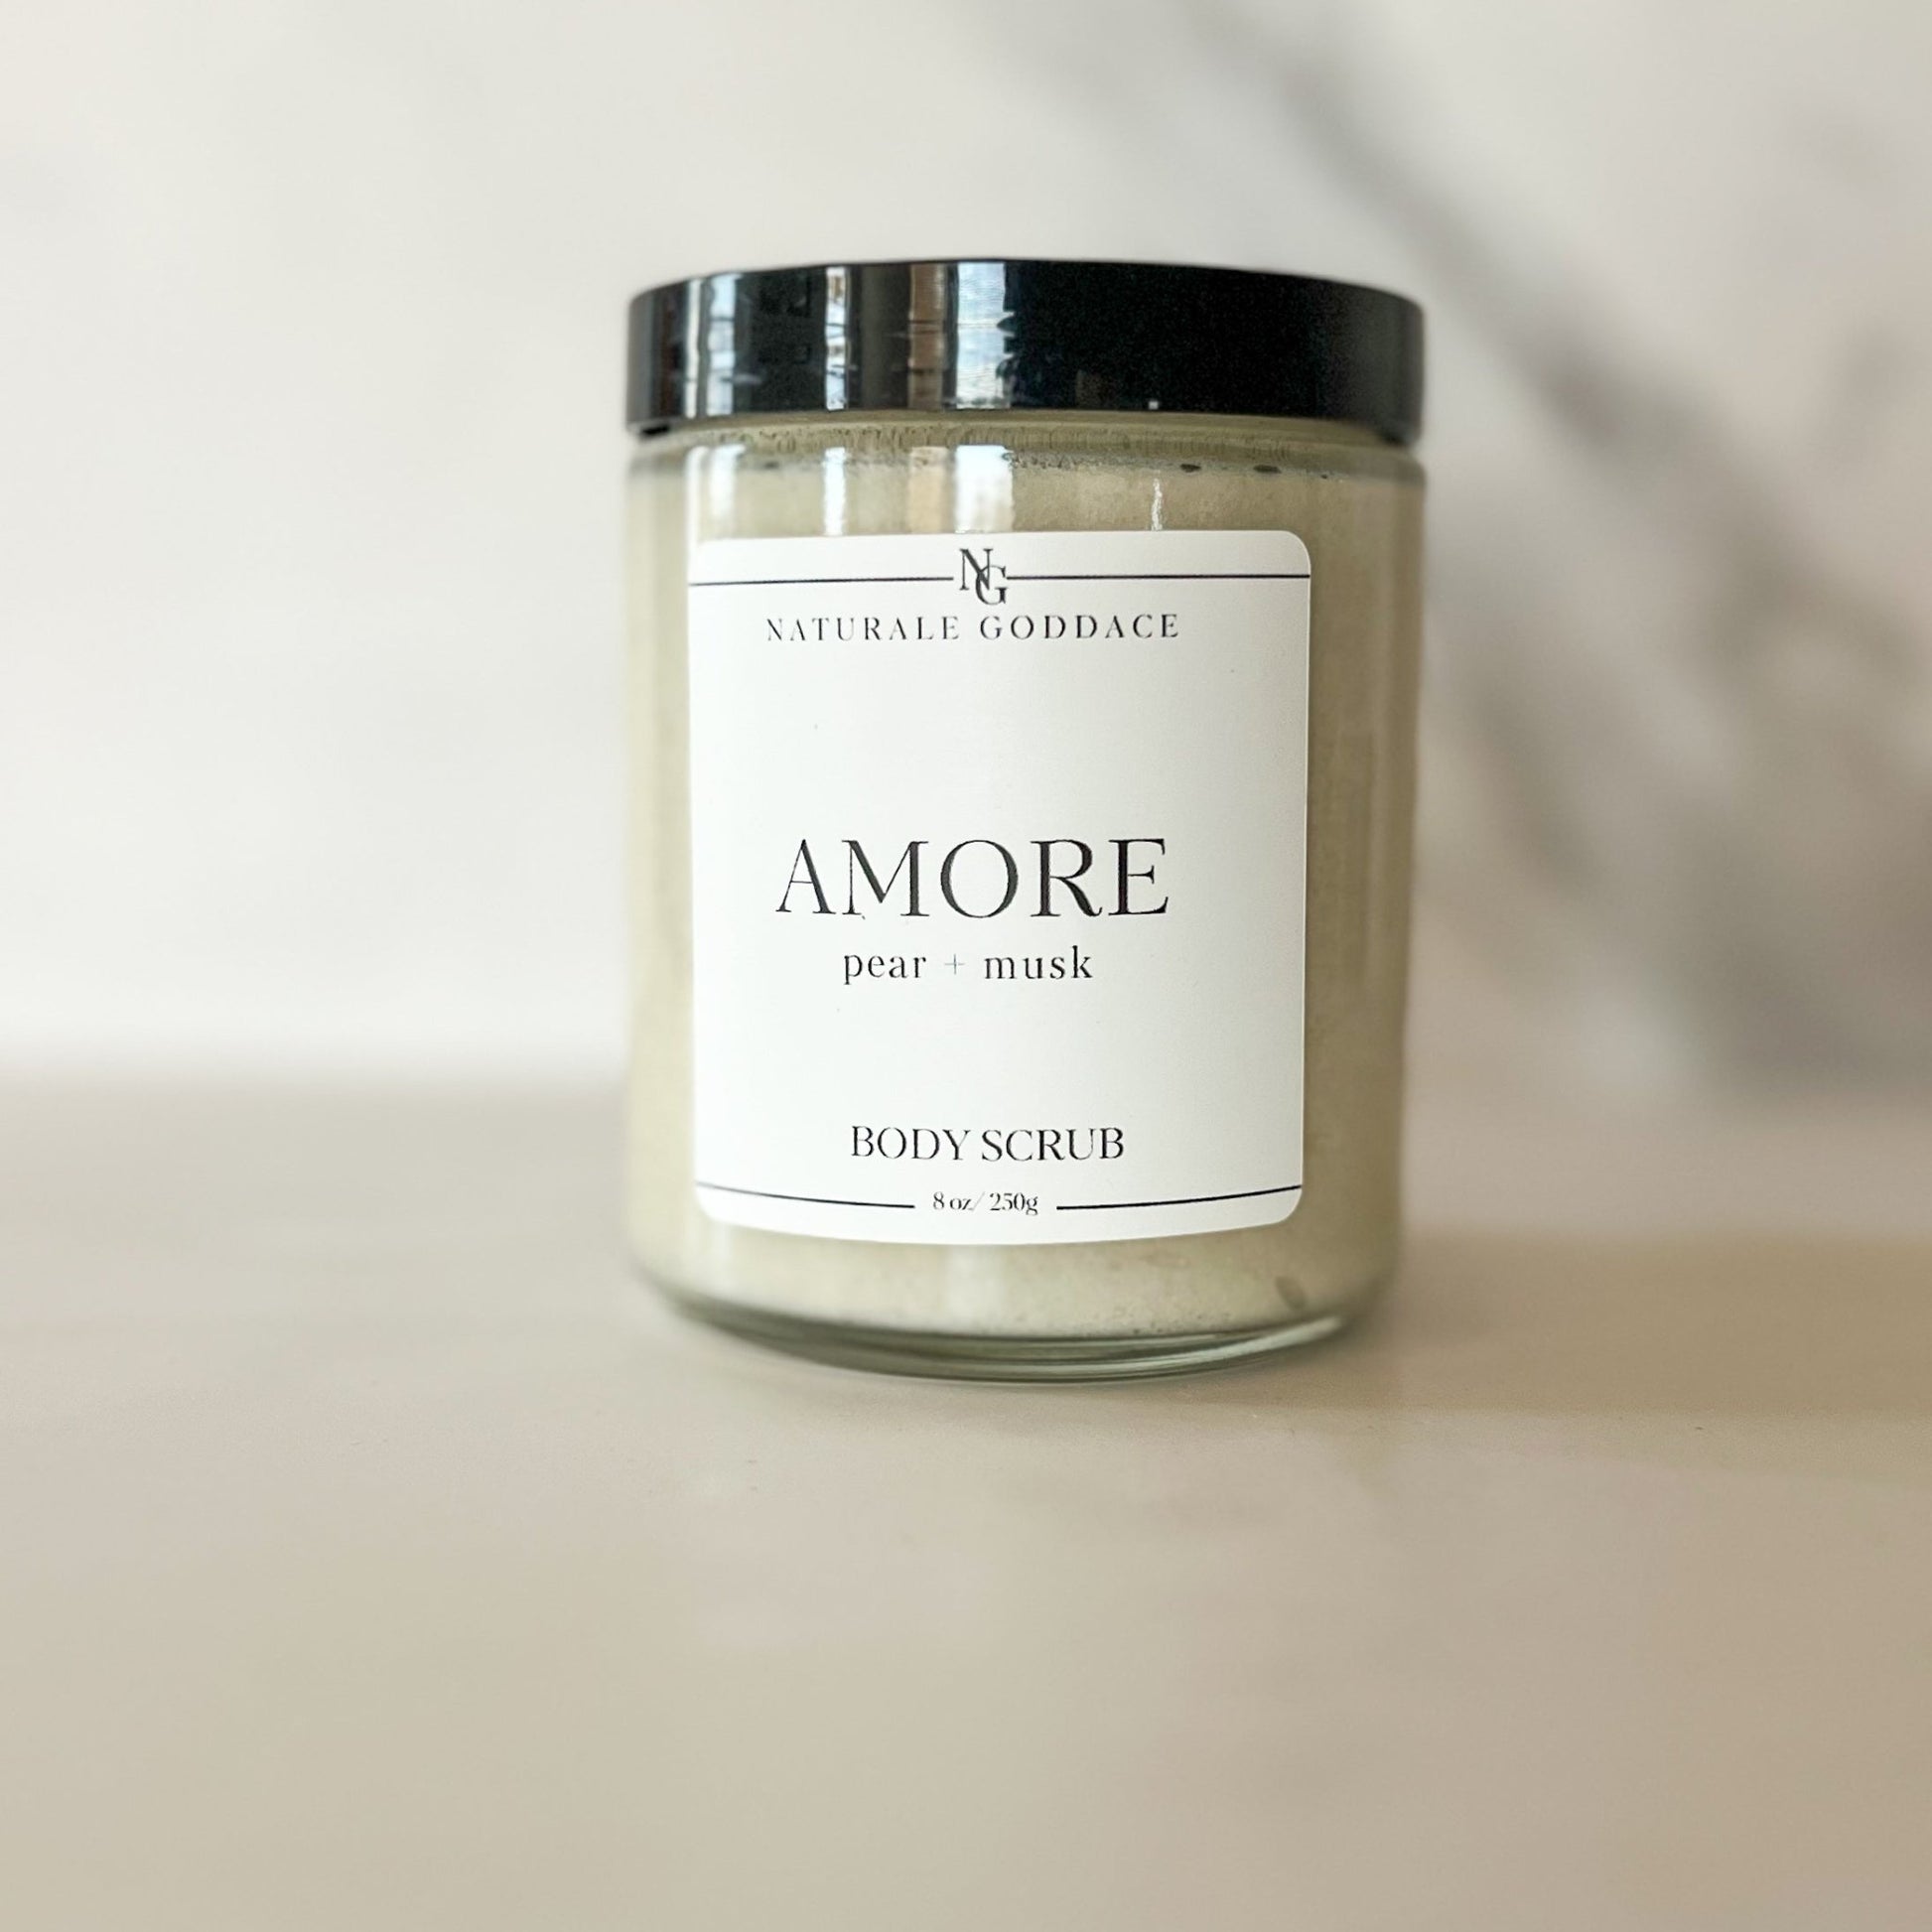 Amore Body Scrub - Naturale Goddace | Clean + simple skincare-